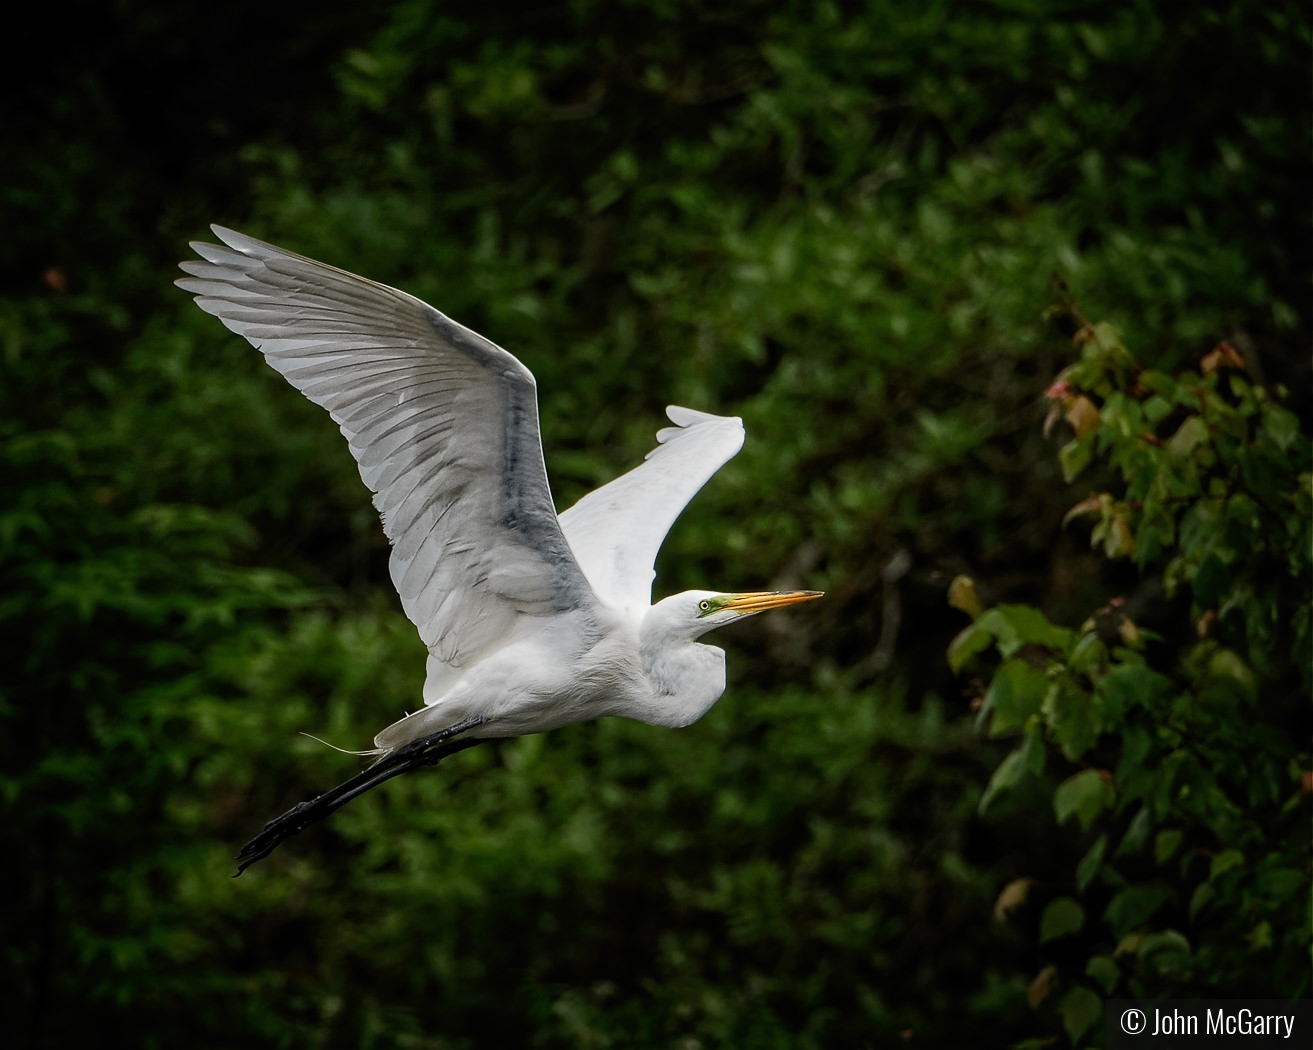 Great White Egret in Flight by John McGarry